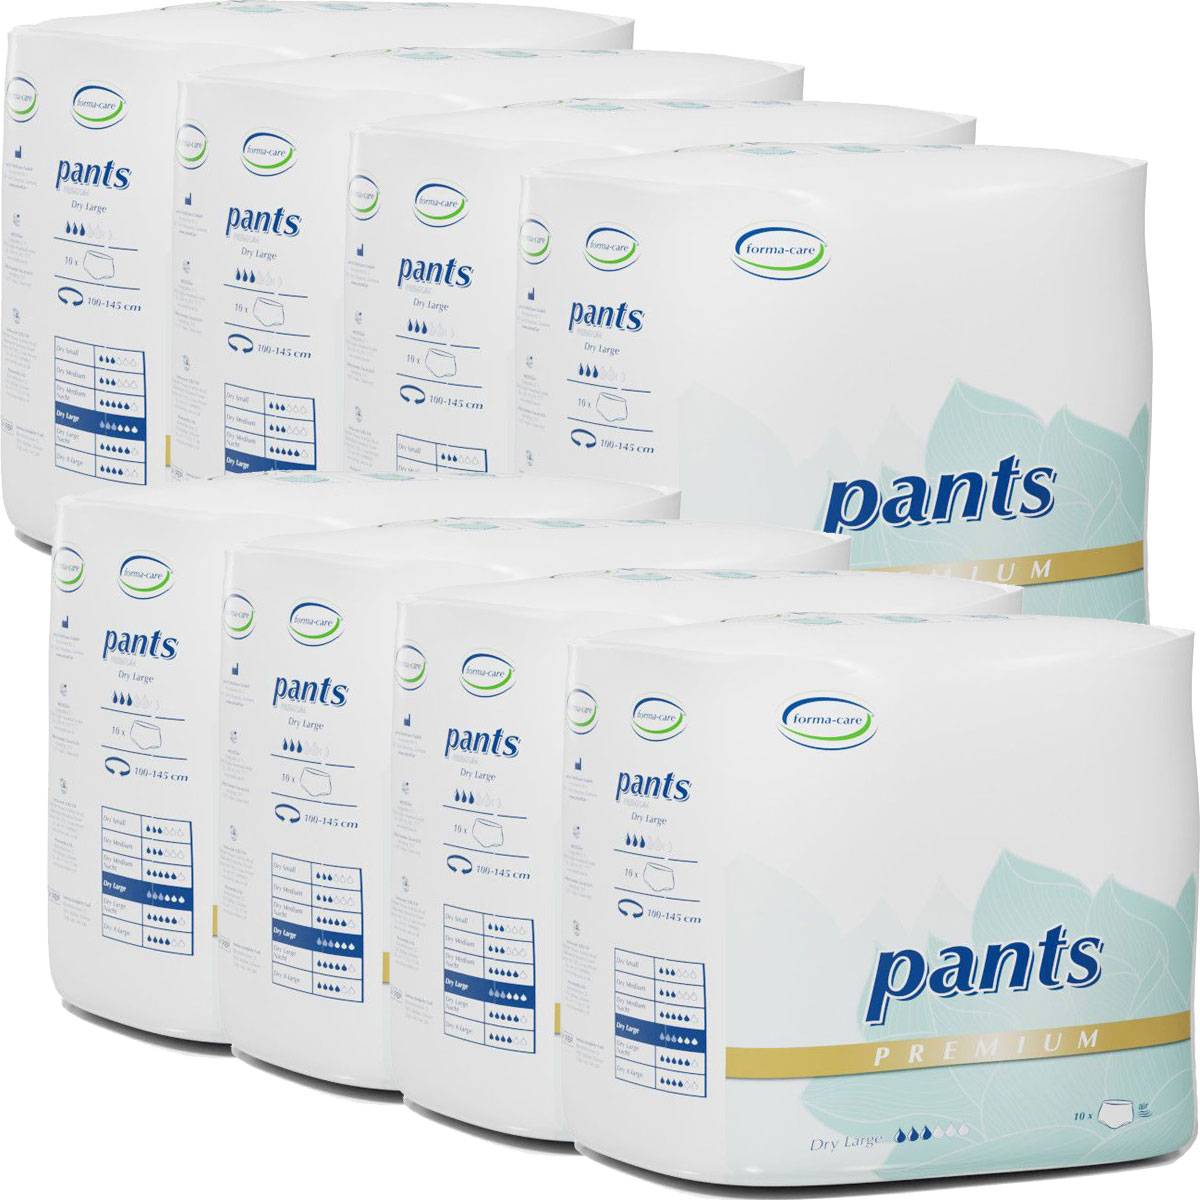 Forma-Care Pants - Premium Dry - Large (L1) - 8x10 Stück